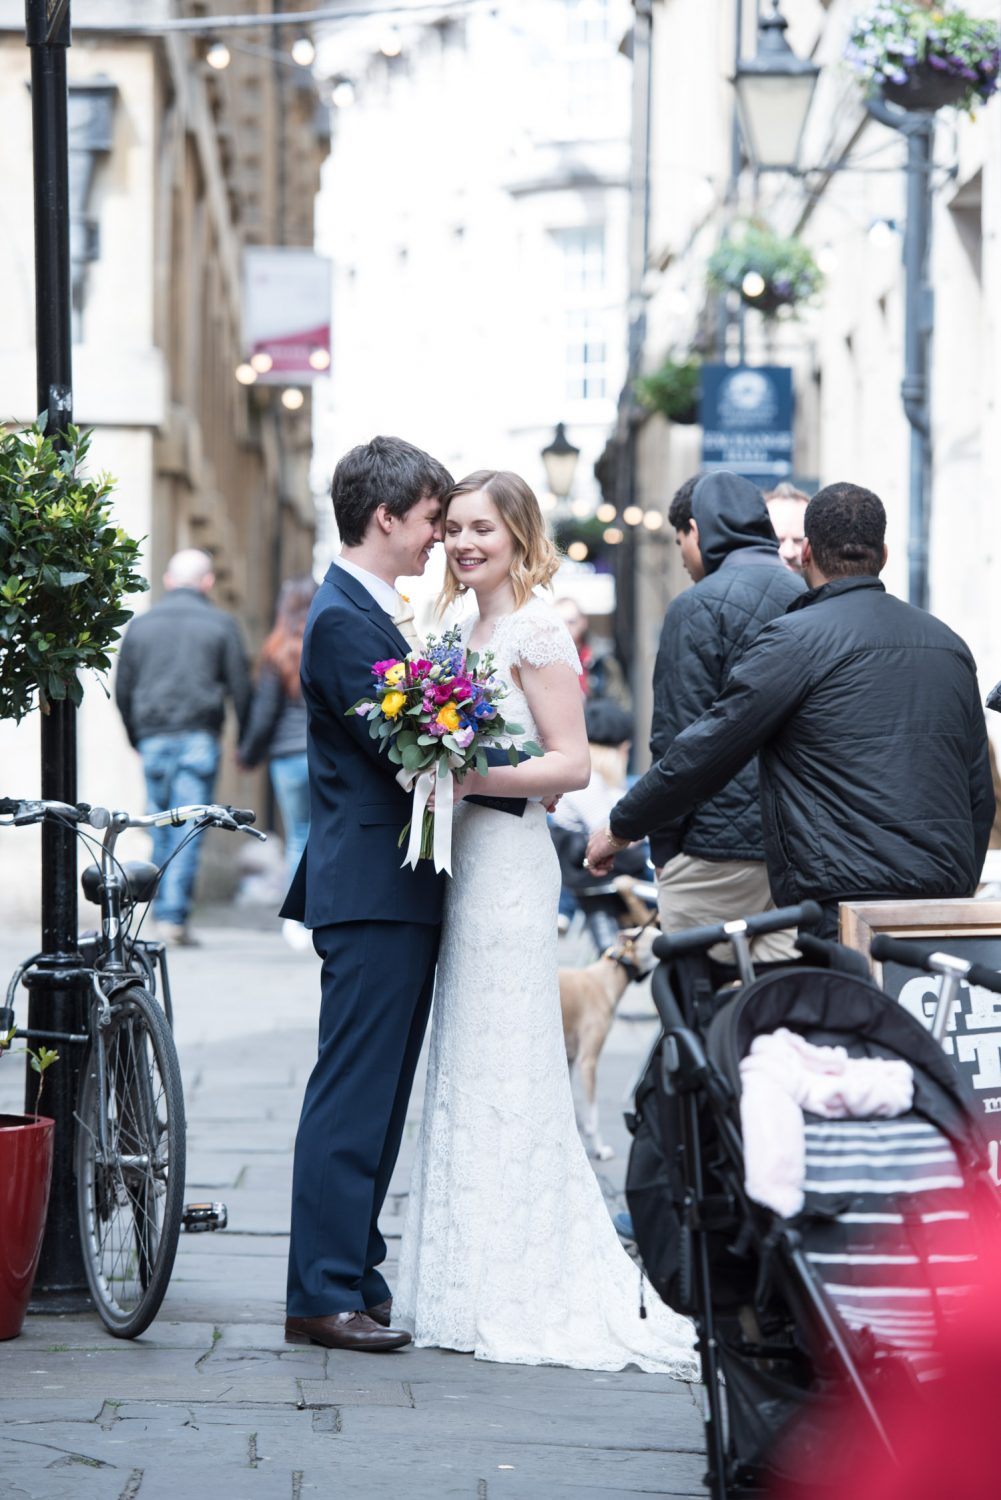 Bride and groom intimate wedding portraits in Bristol city centre, wedding photographer Bristol